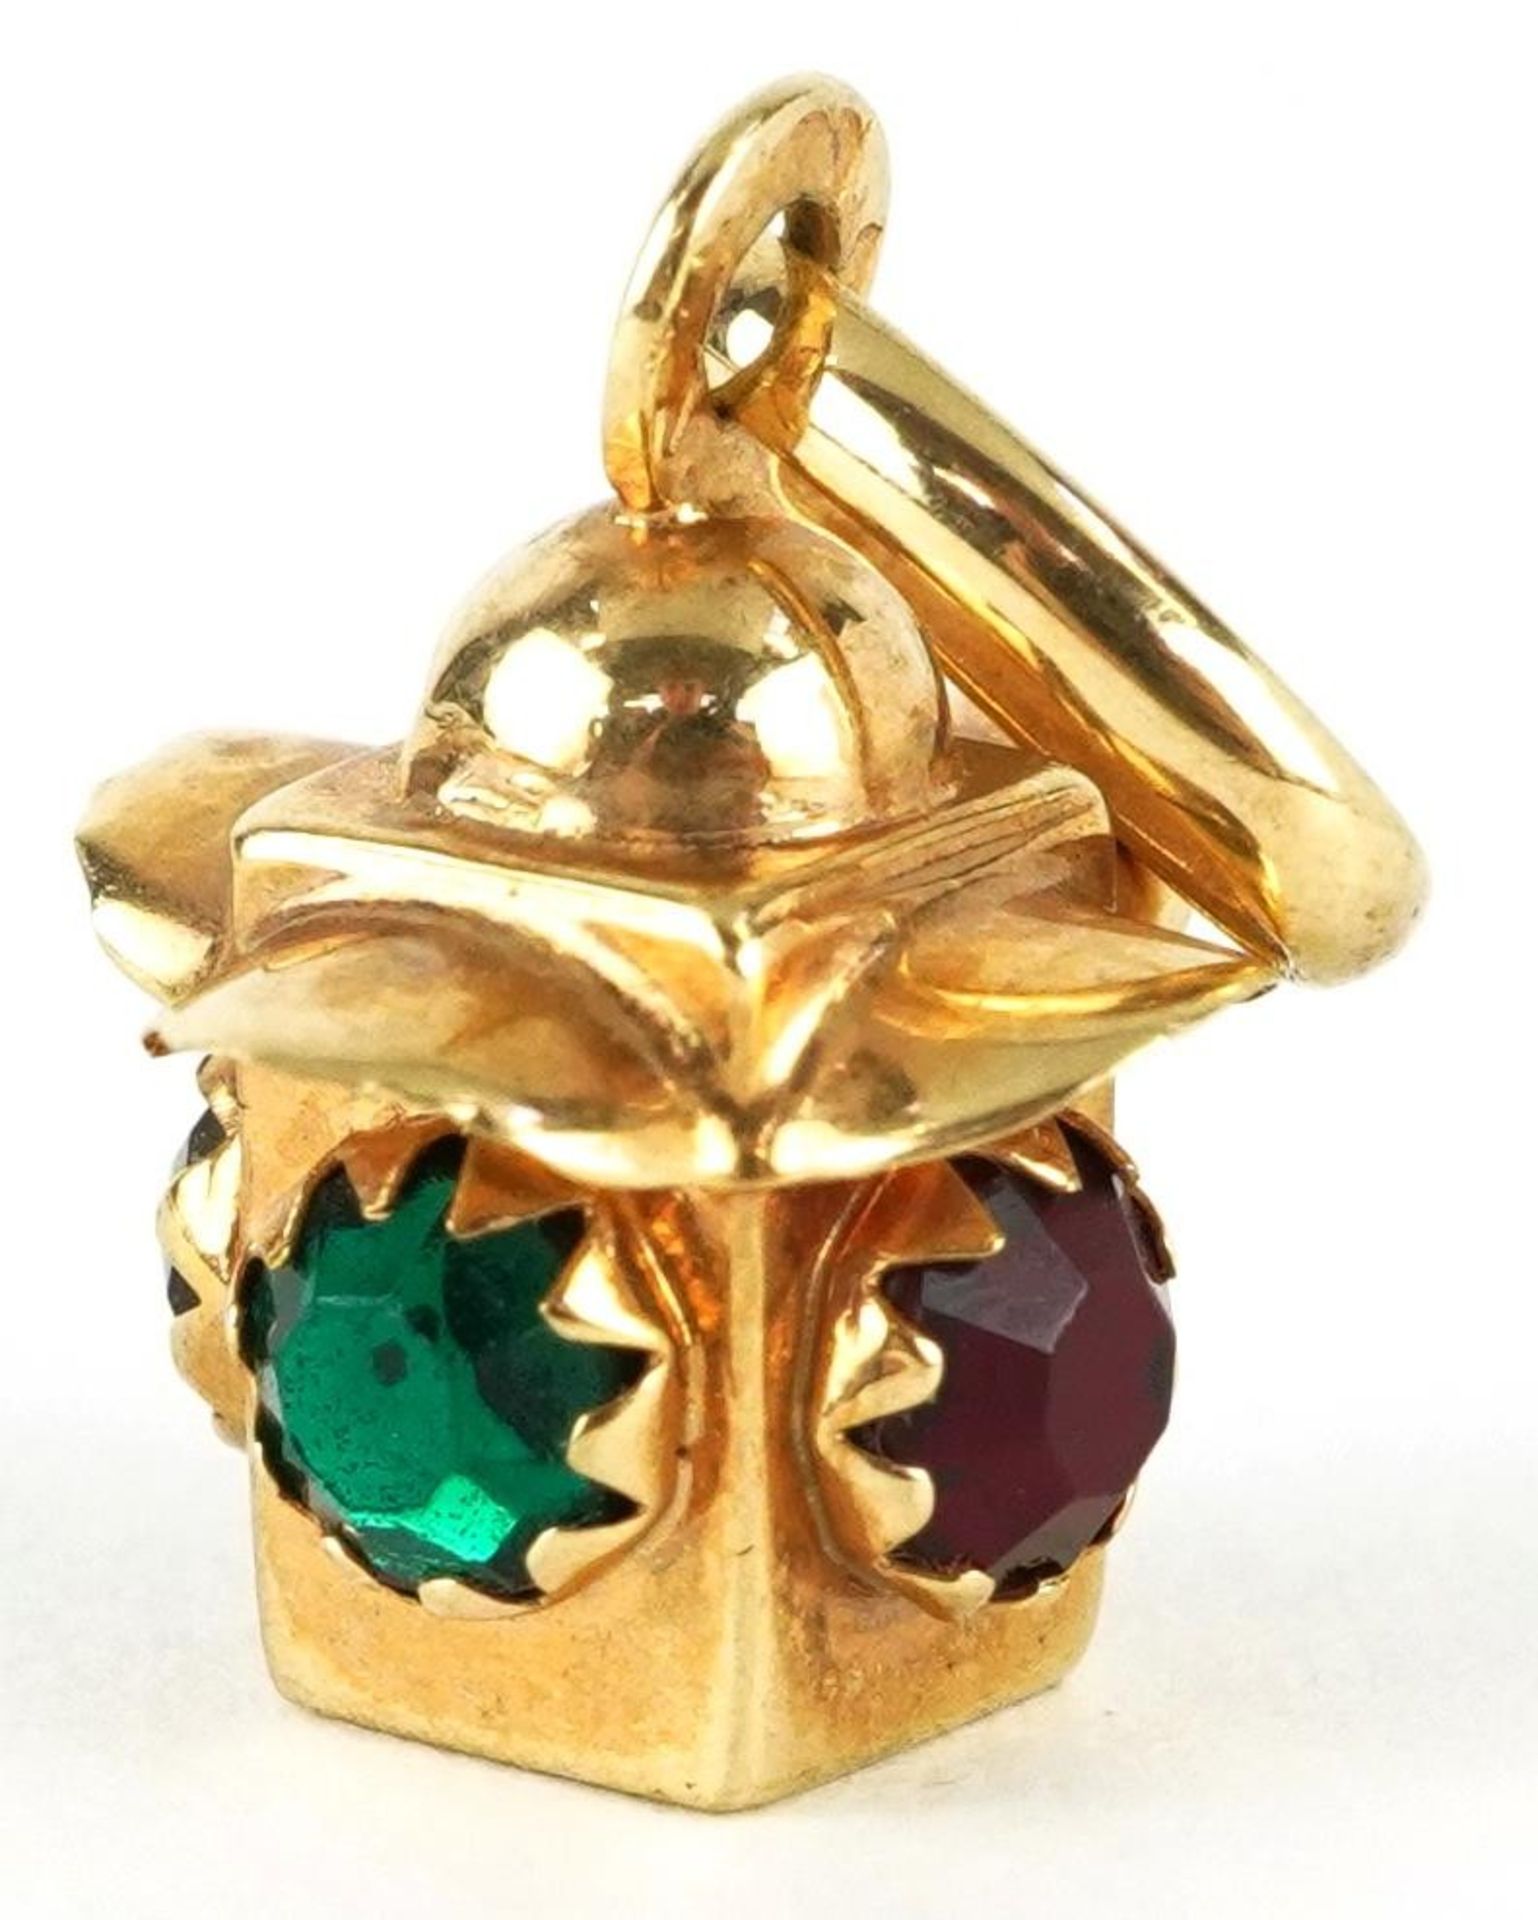 9ct gold lantern charm set with red and green stones, 2.2cm high, 2.0g - Bild 2 aus 4